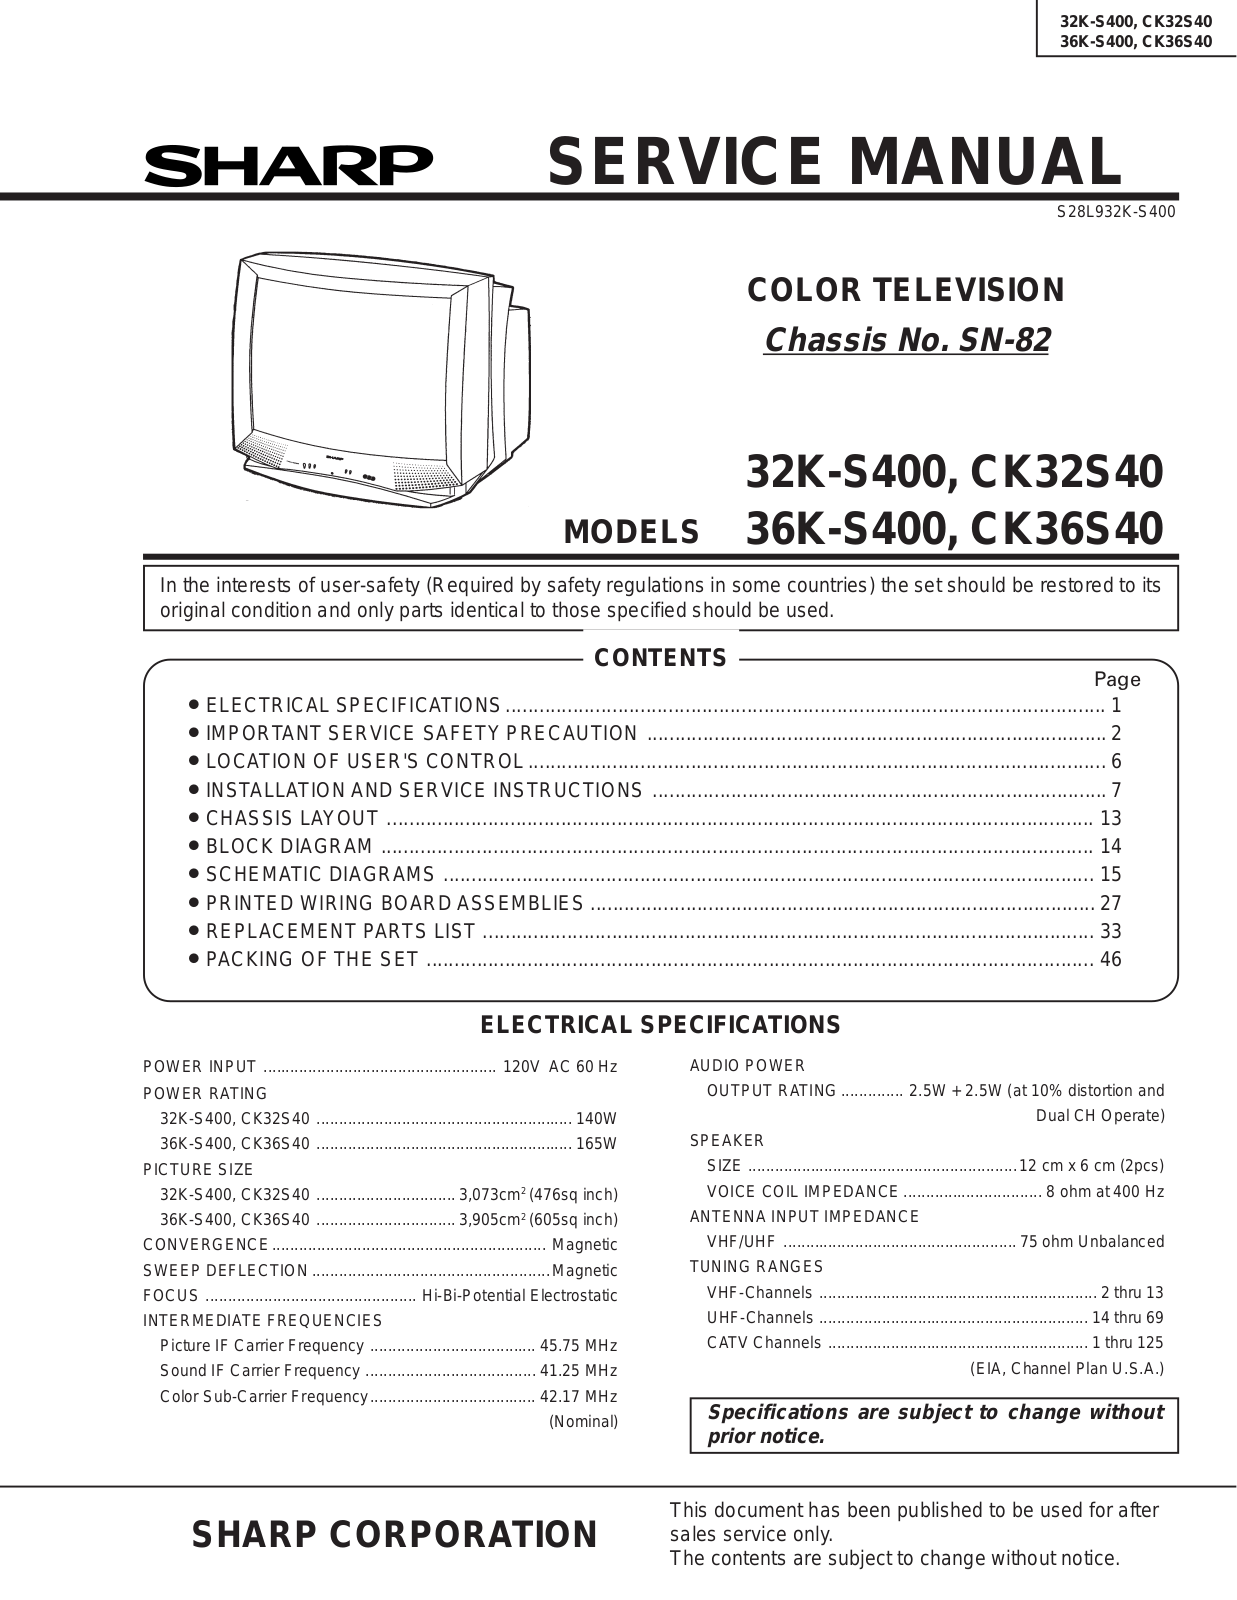 Sharp 36K-S400, CK36S40, 32K-S400, CK32S40 User Manual